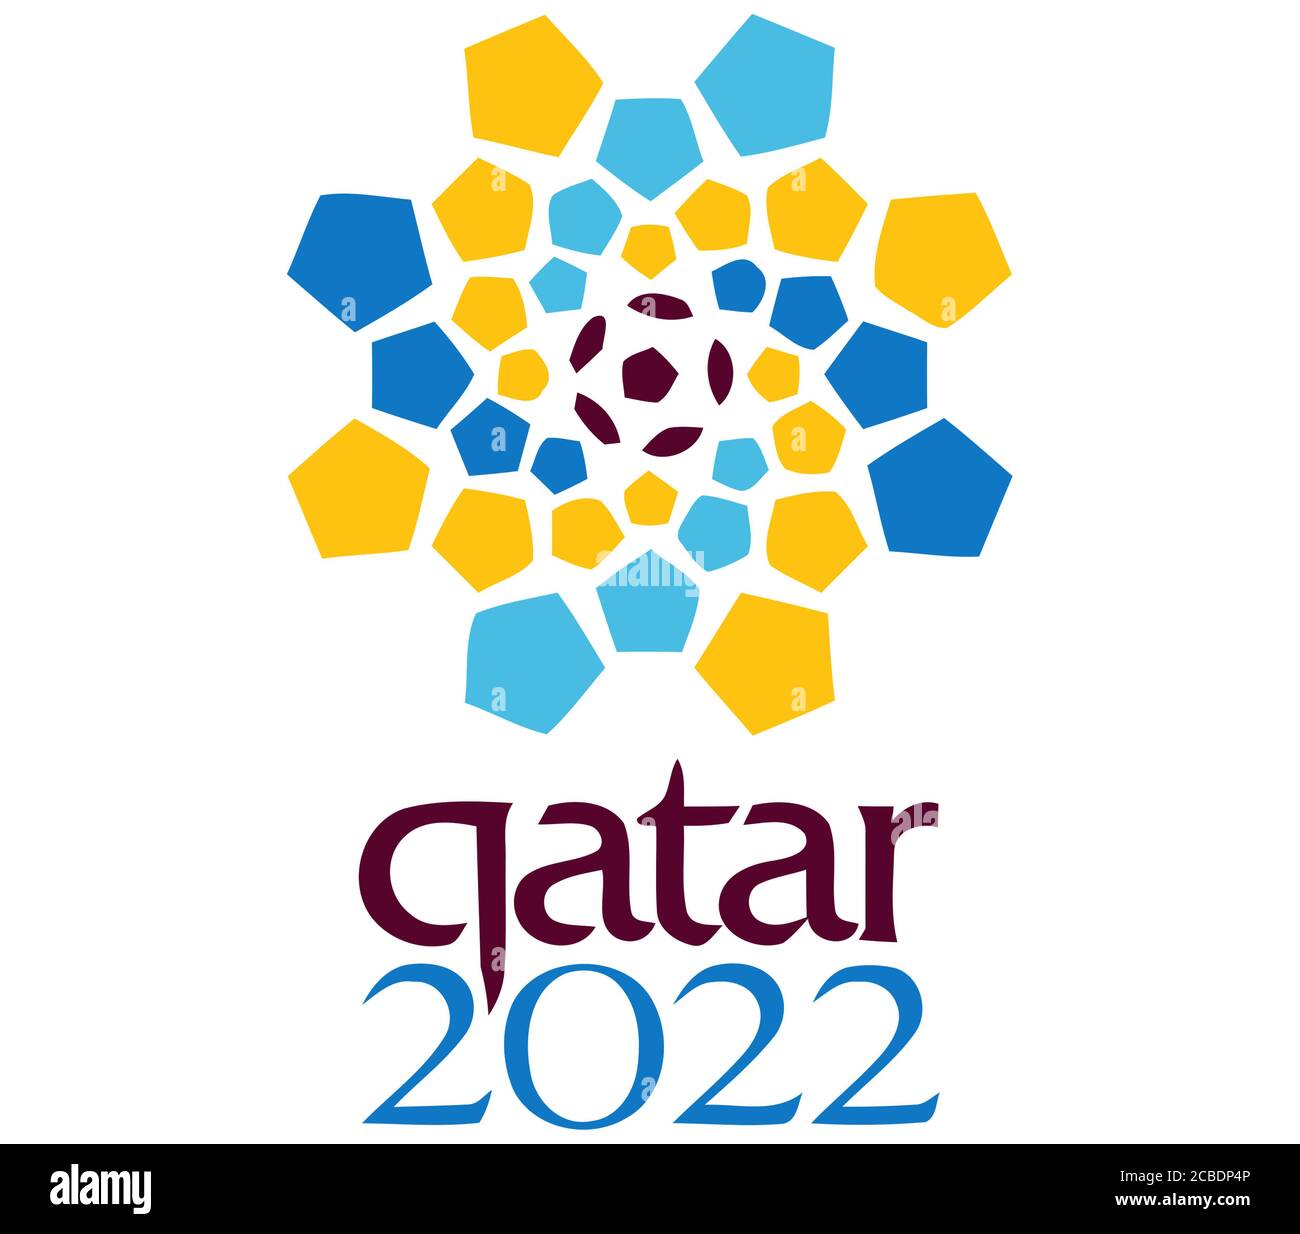 Qatar FIFA World Cup 2022 logo icon symbol Stock Photo